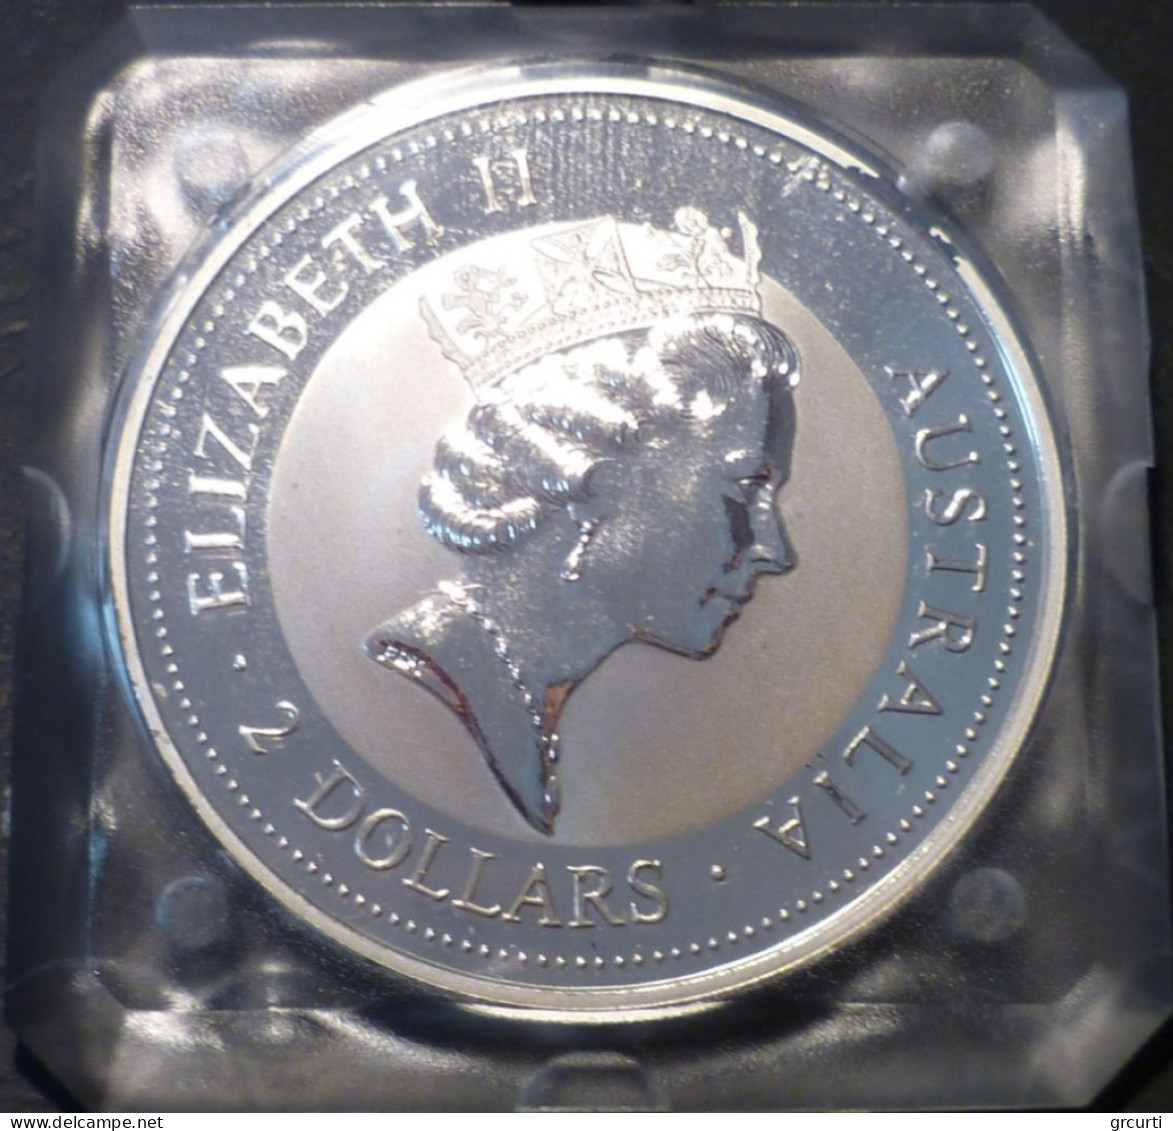 Australia - 2 Dollari 1992 - Kookaburra - KM# 261 - Silver Bullions